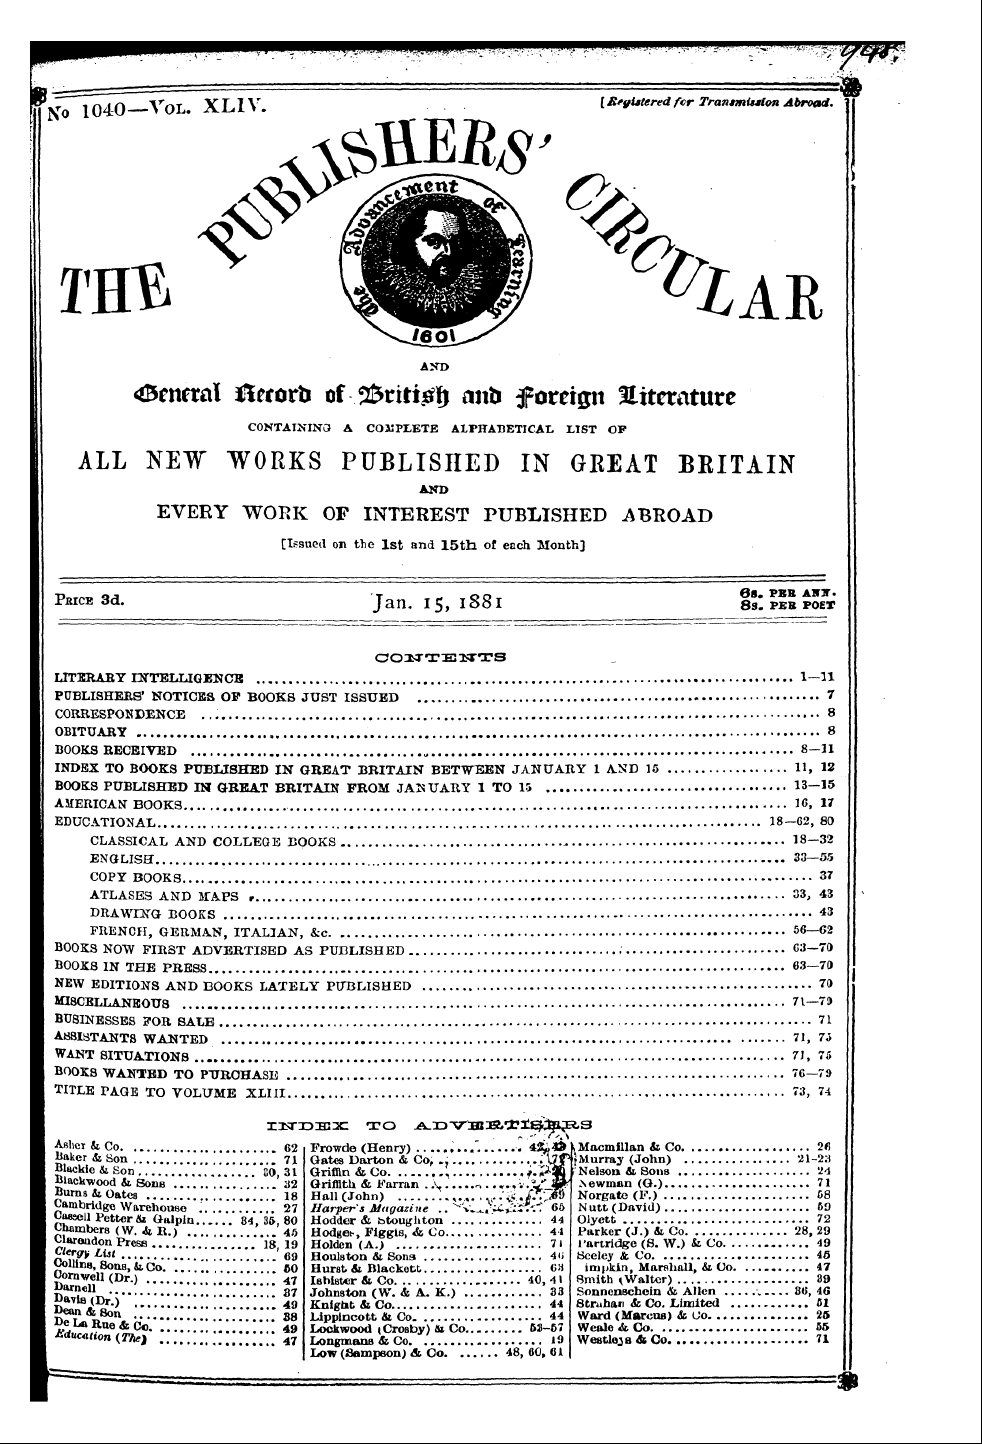 Publishers’ Circular (1880-1890): jS F Y, 1st edition - Xitjdksx: To J£±.Jdvttj& R X?2.G&Eur,3 A...